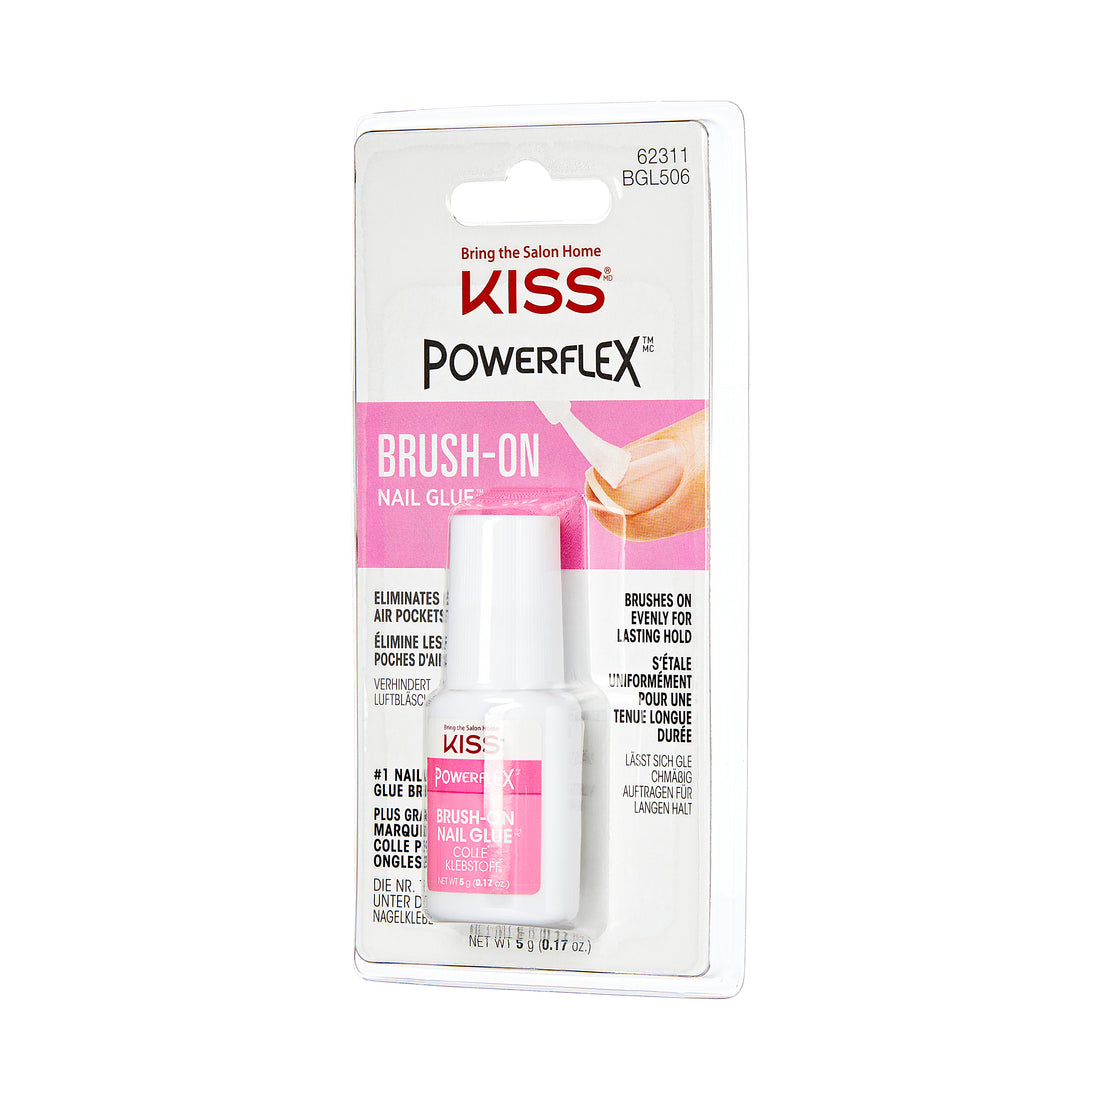 KISS PowerFlex Brush-On Nail Glue